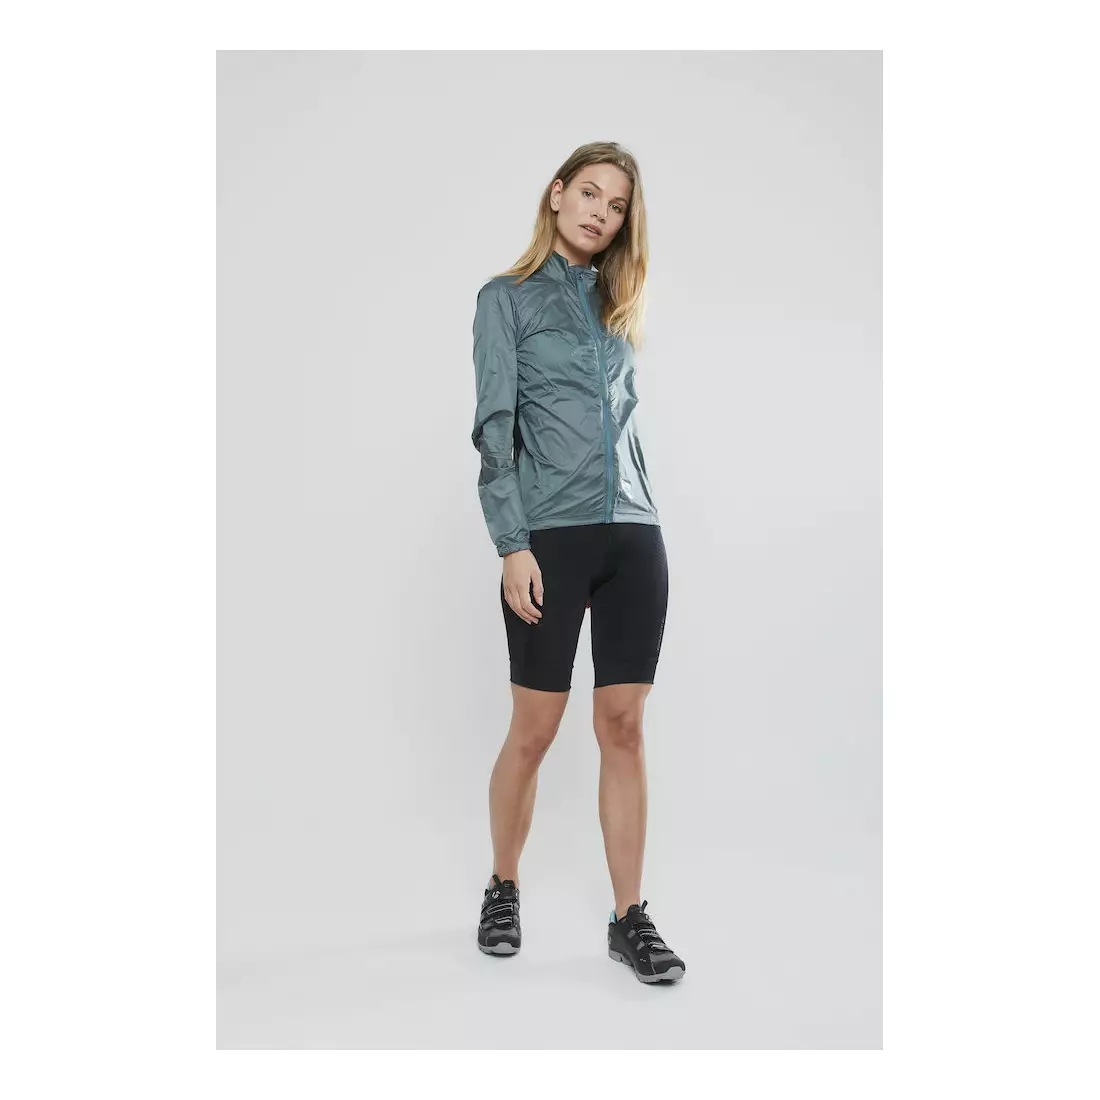 CRAFT RISE women's cycling shorts, black 1906078-999999